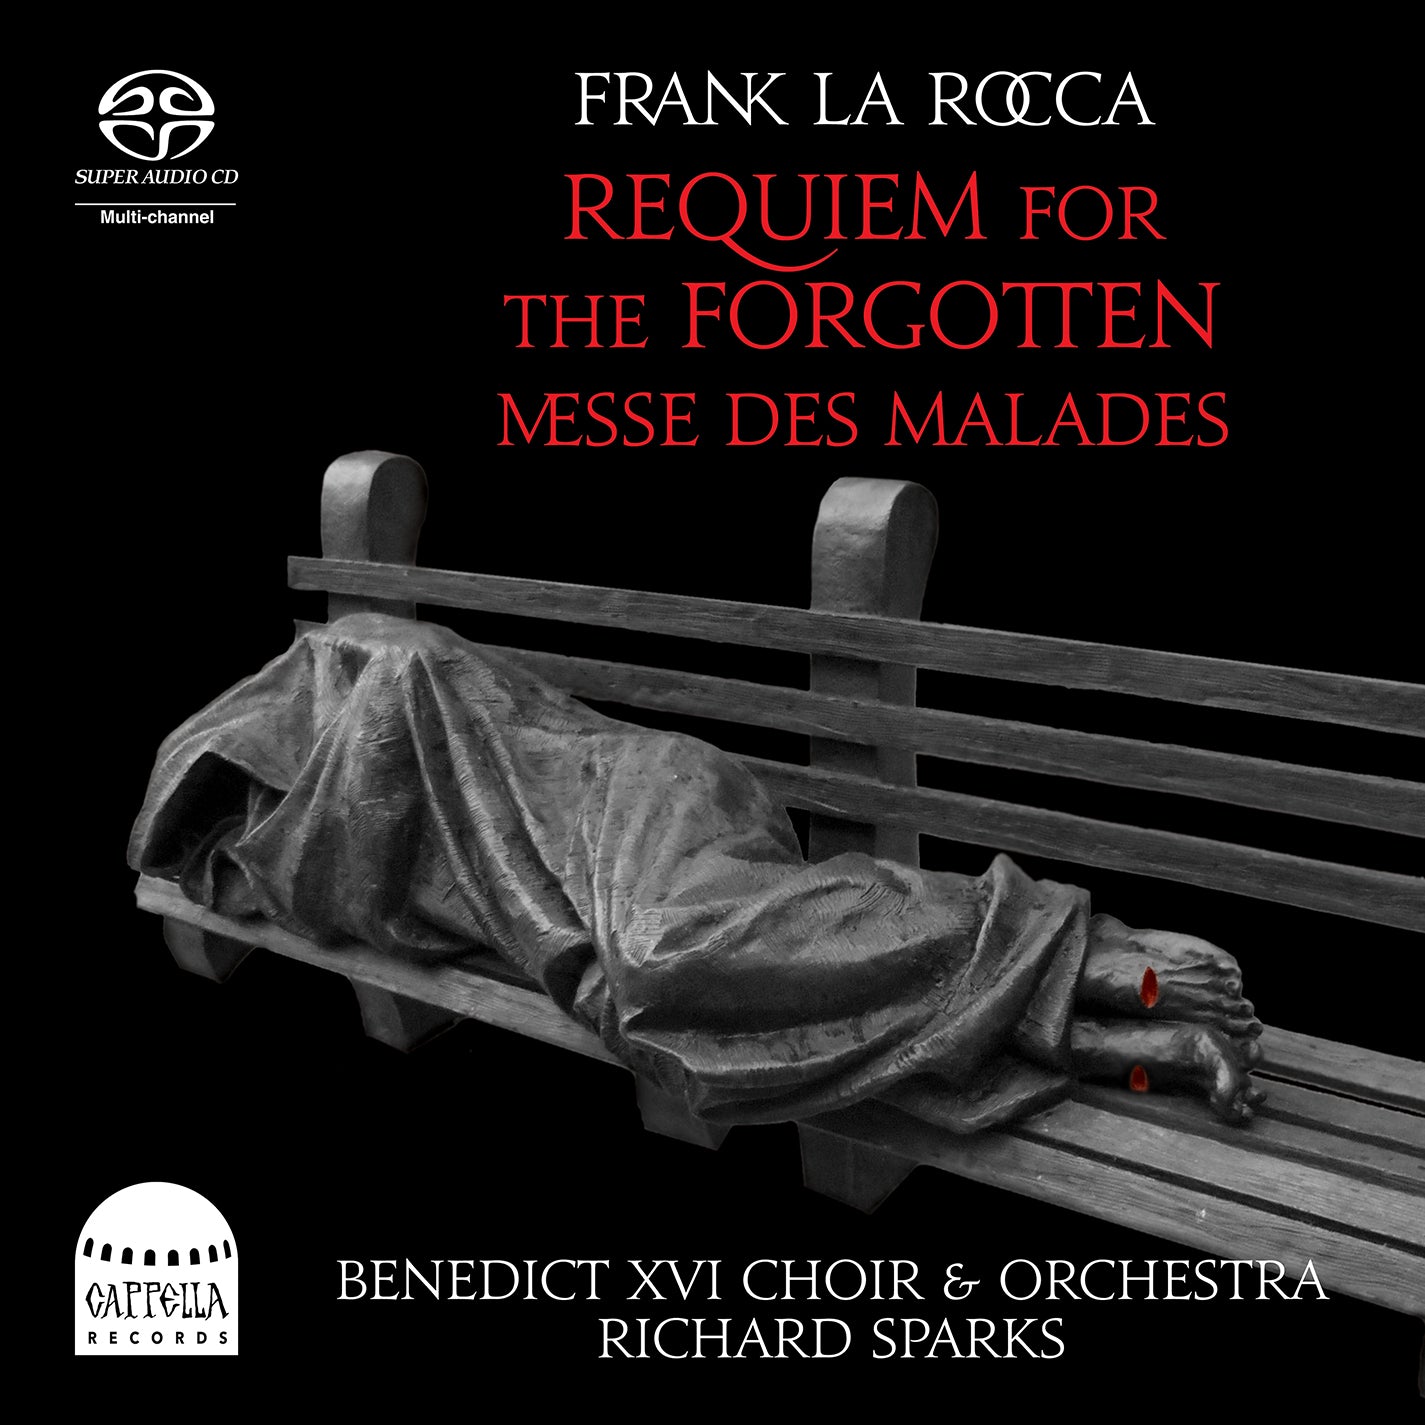 La Rocca: Requiem for the Forgotten / Sparks, Benedict XVI Choir & Orchestra